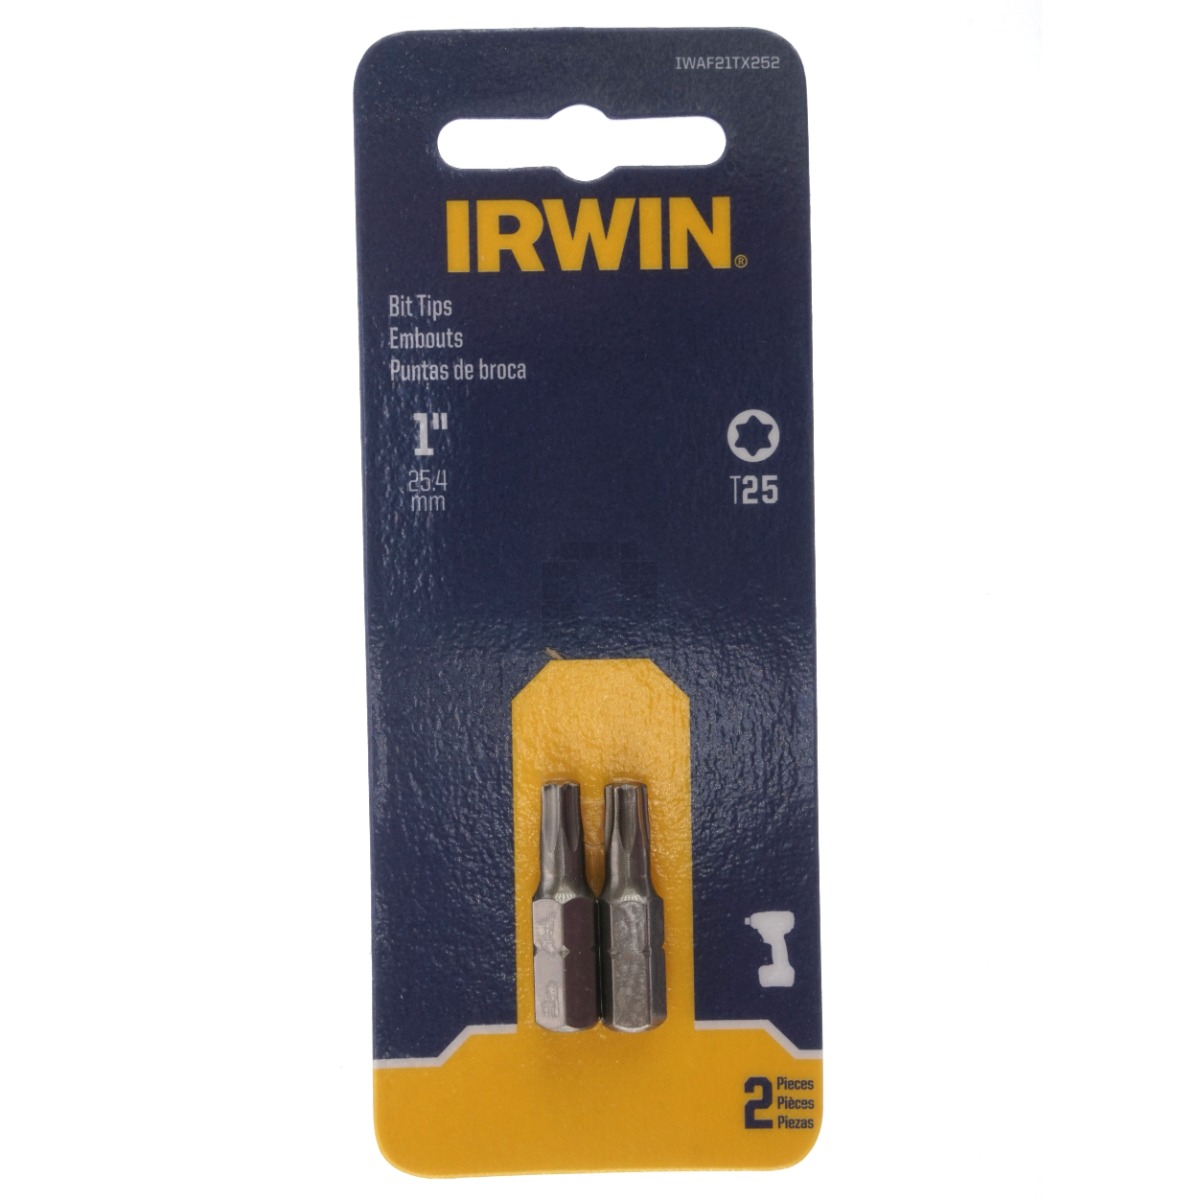 Irwin IWAF21TX252 T25 Torx Bit Tips, 2 Pack, 1" Length